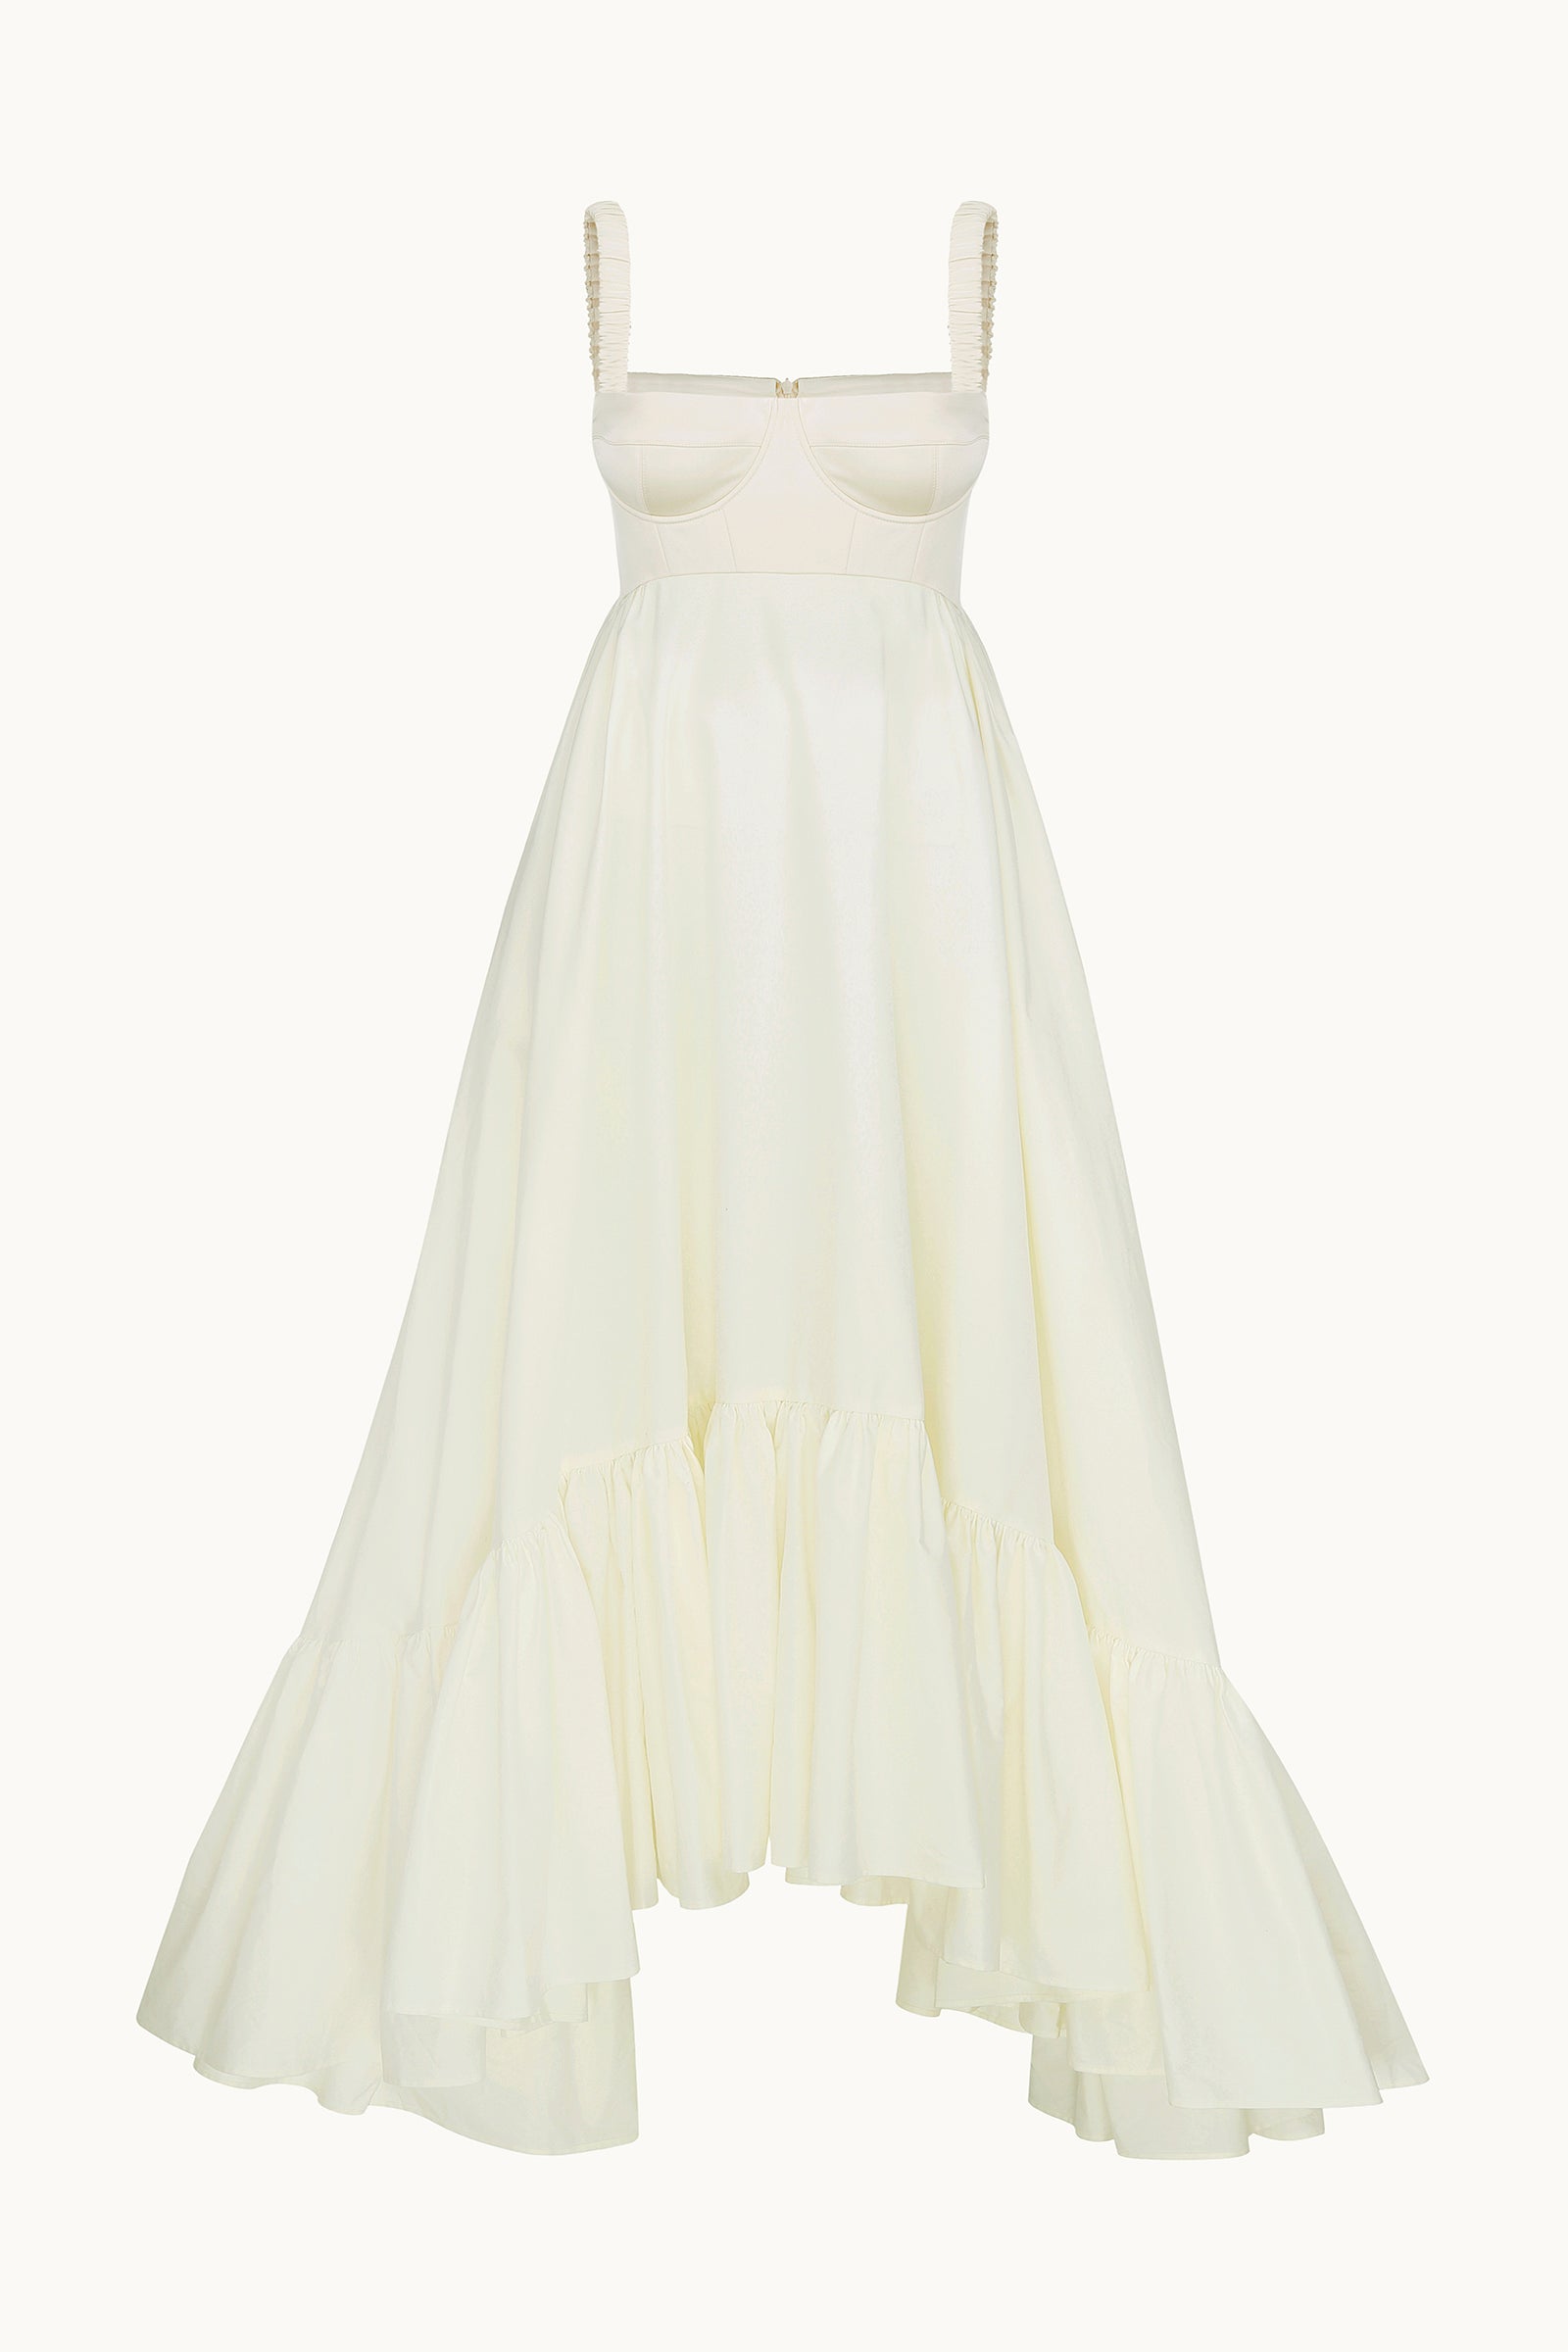 Snowdrop dress